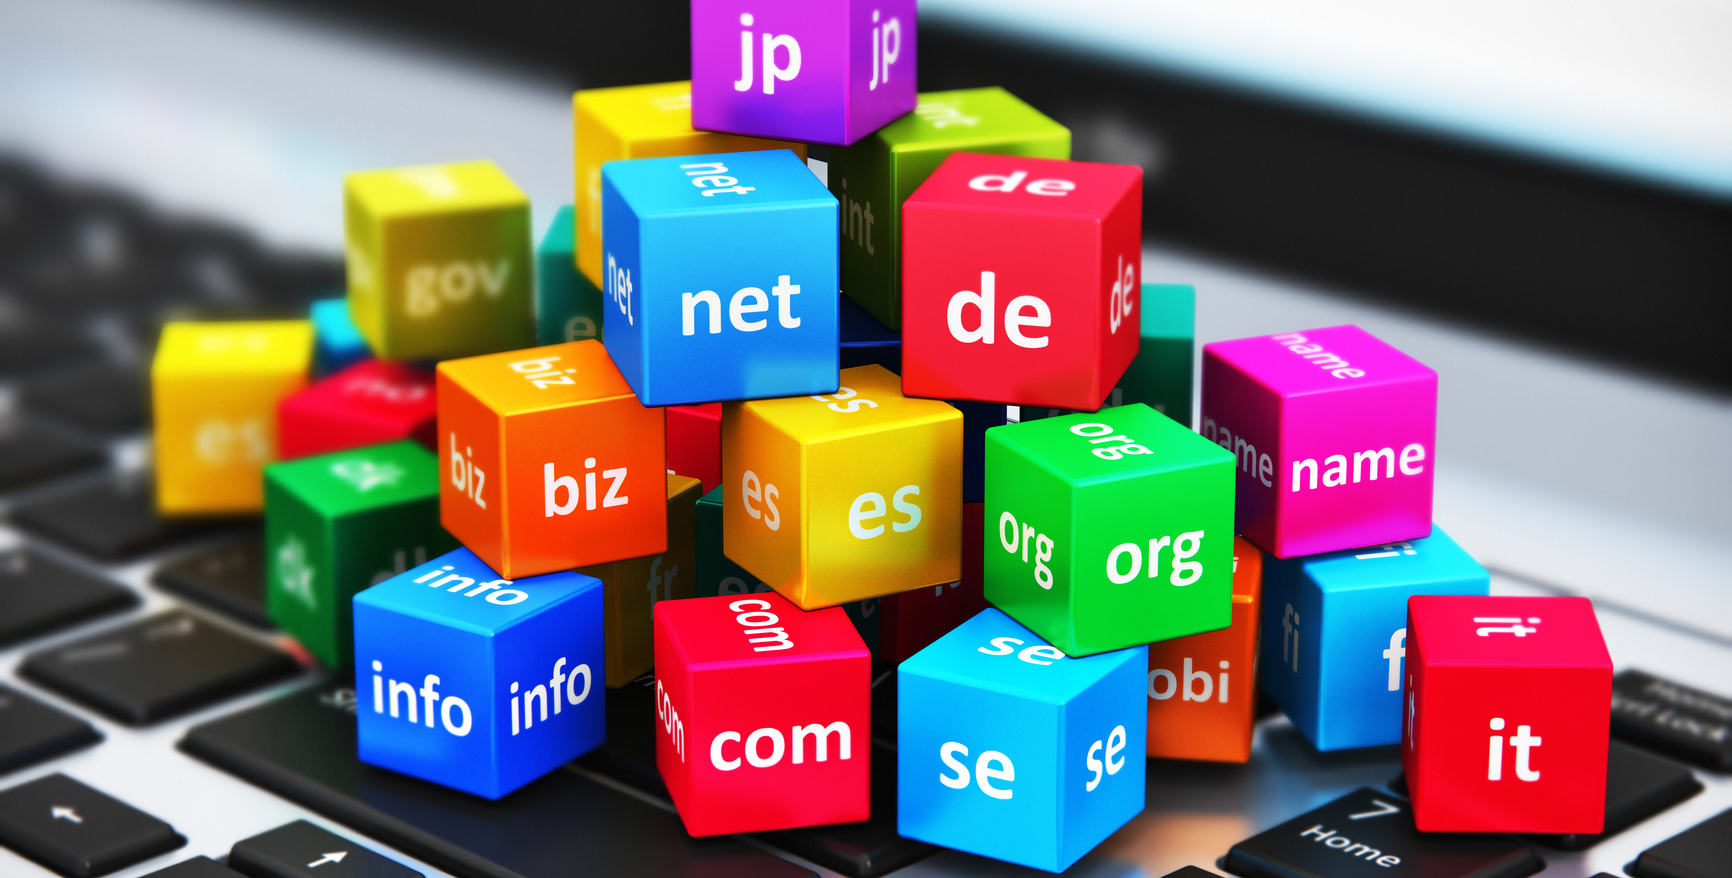 Tips for Choosing the Best Domain Name